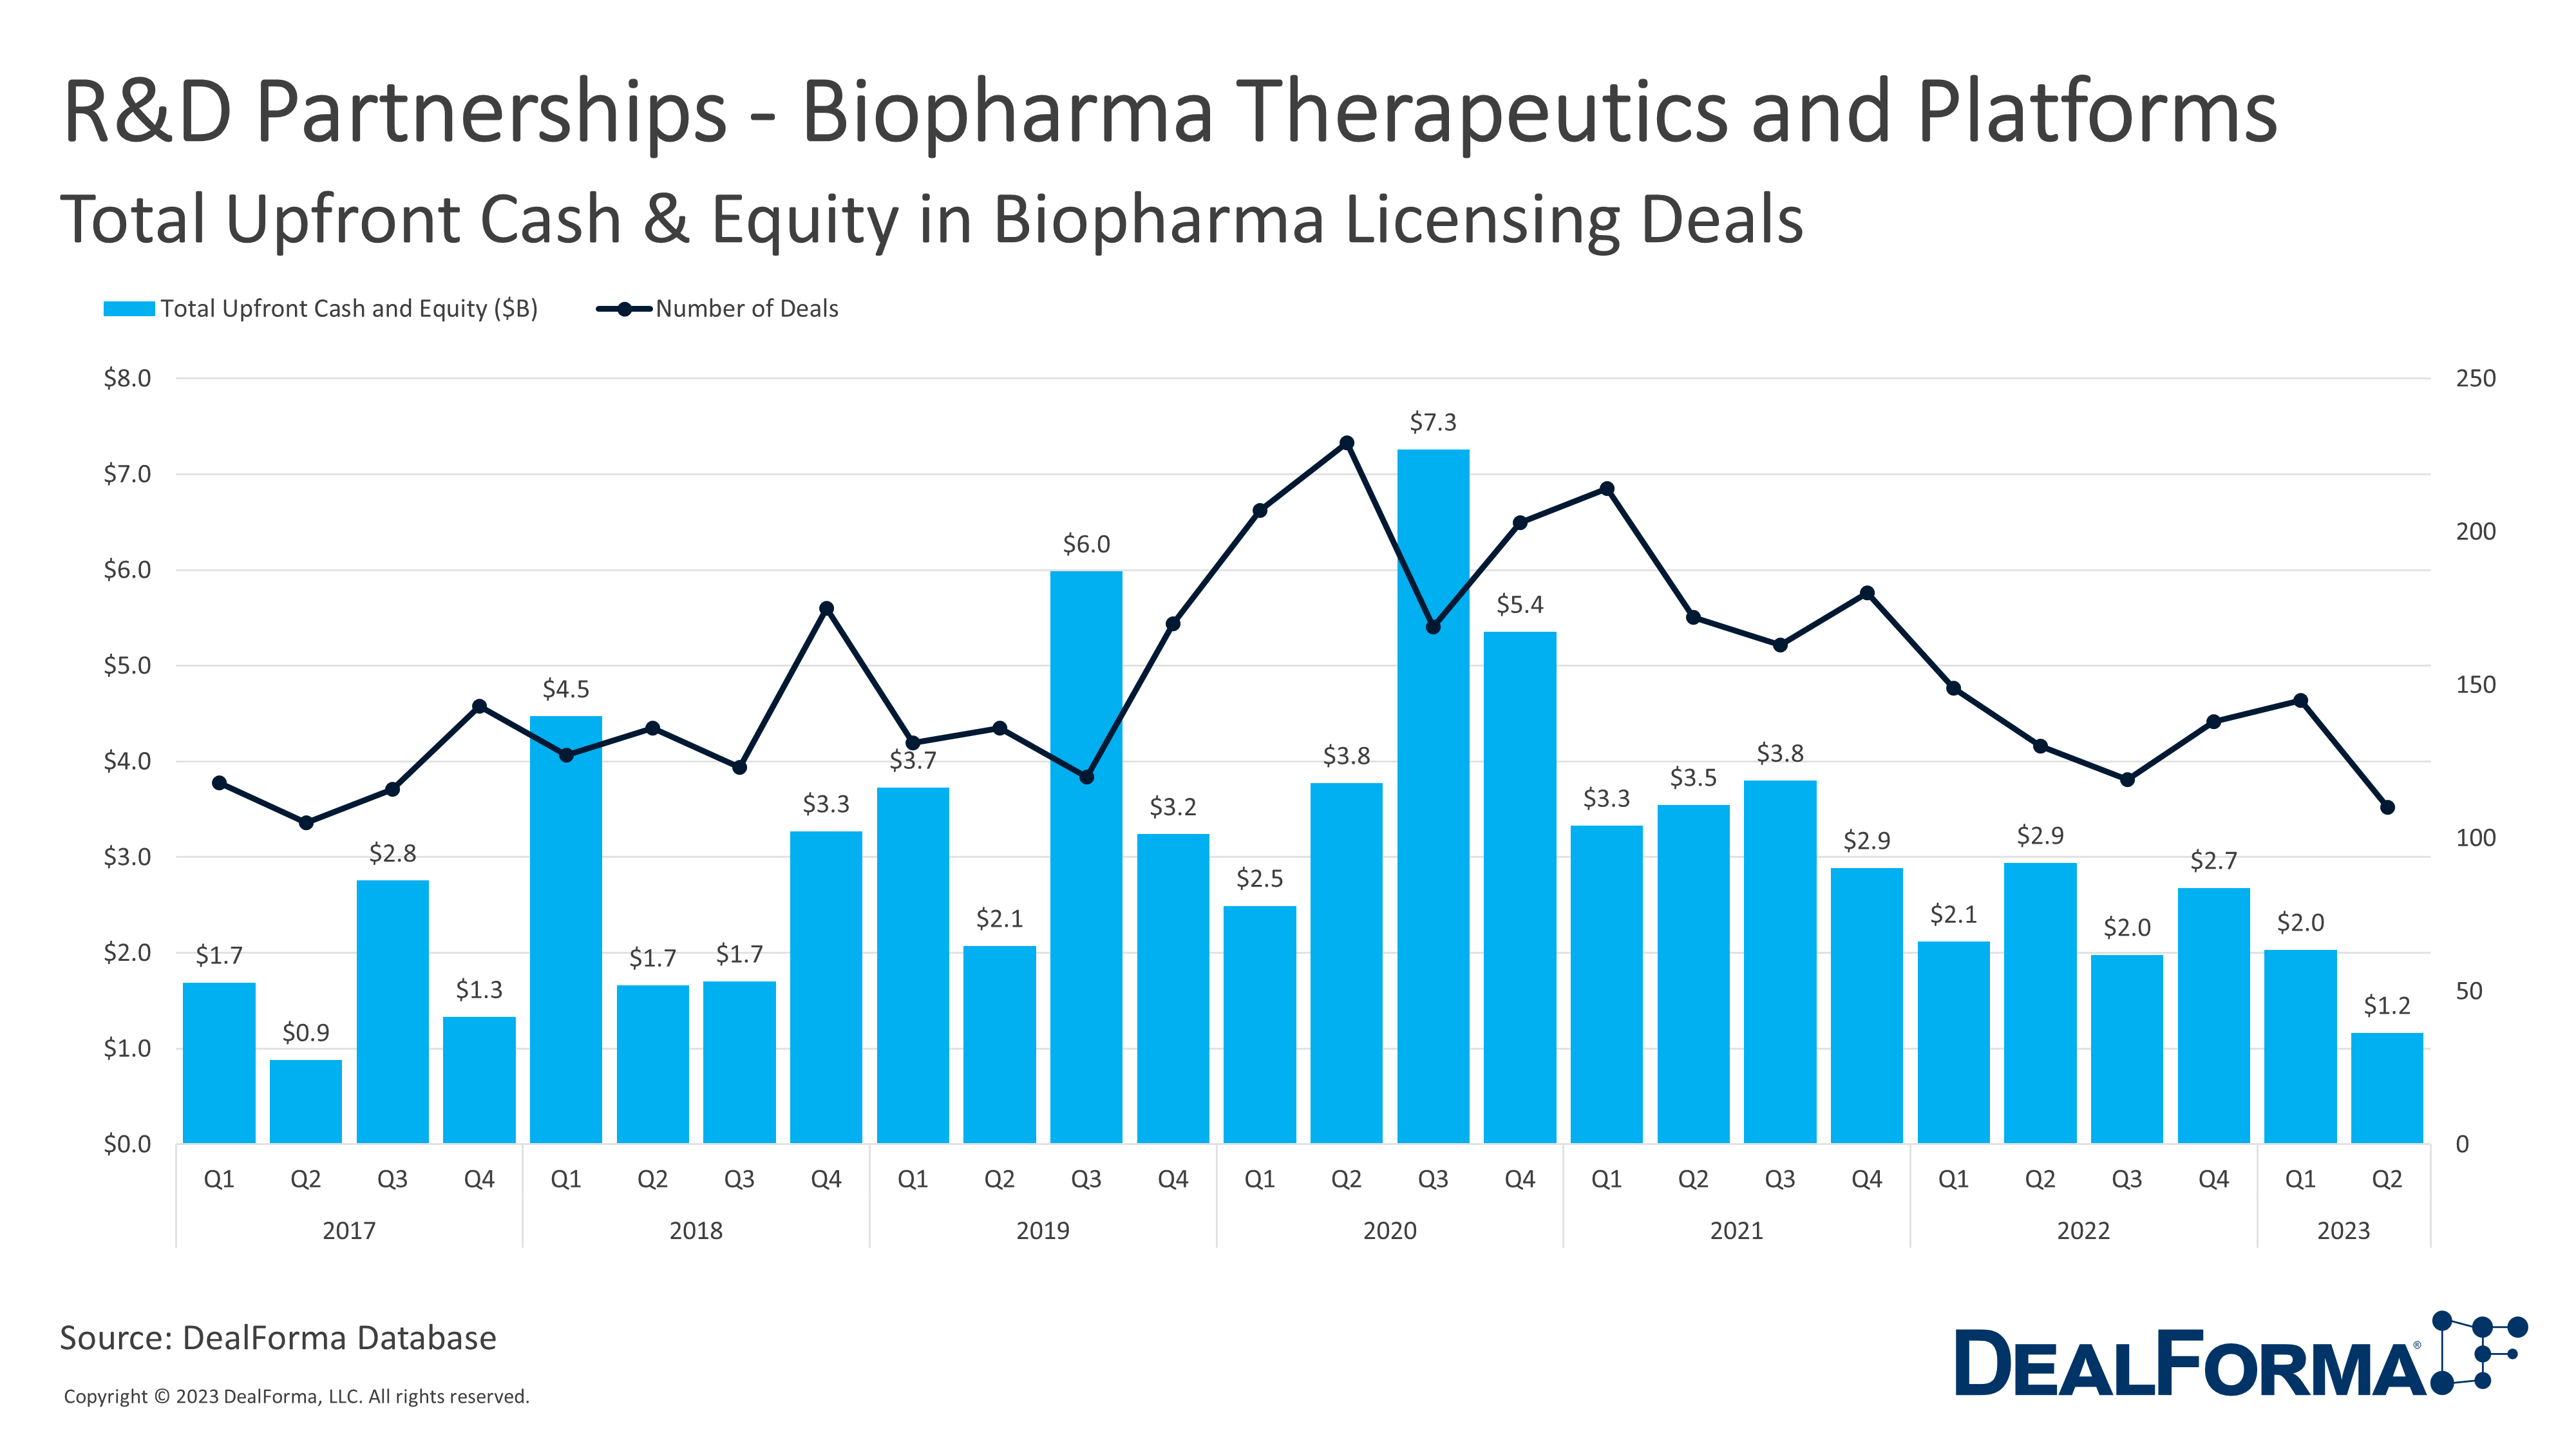 R&D Partnerships - Biopharma Tx and Platforms. Total Upfront Cash & Equity - Biopharma. DealForma